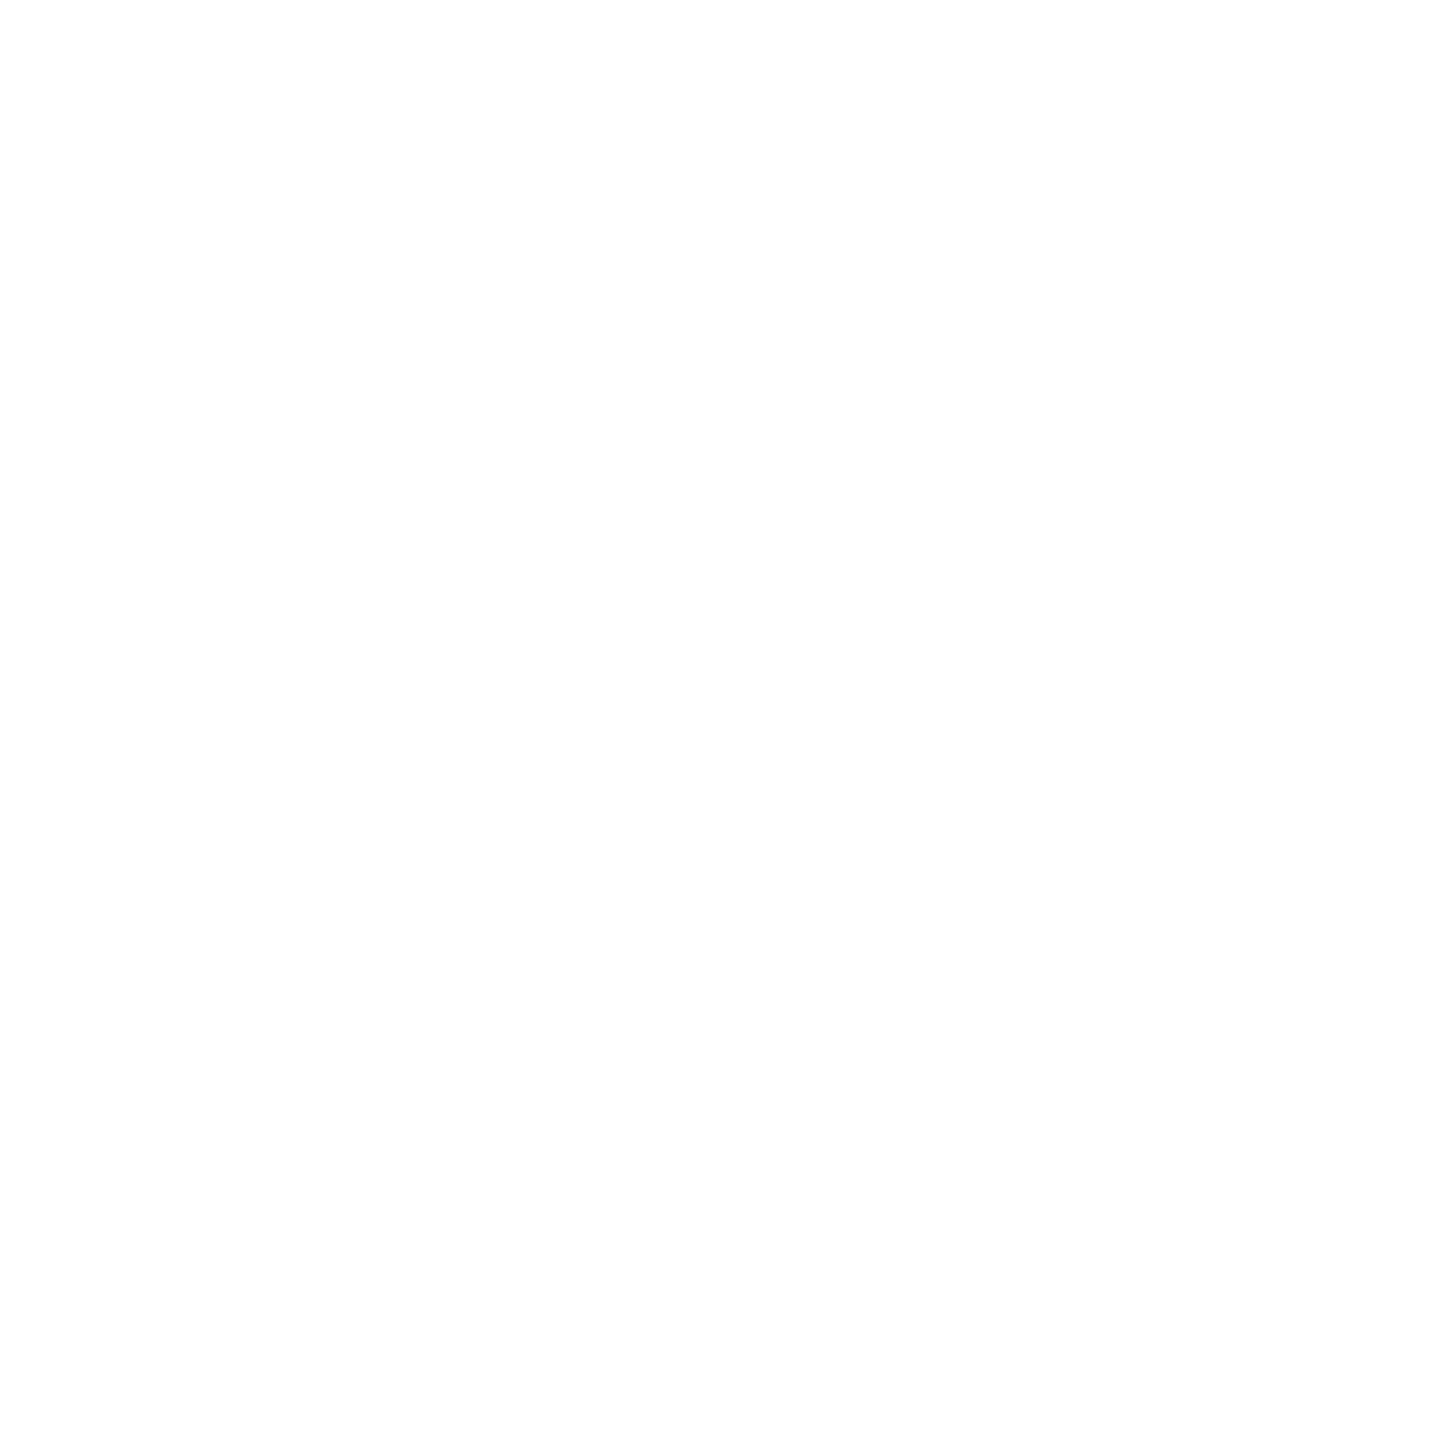 Pilbara Minerals logo pour fonds sombres (PNG transparent)